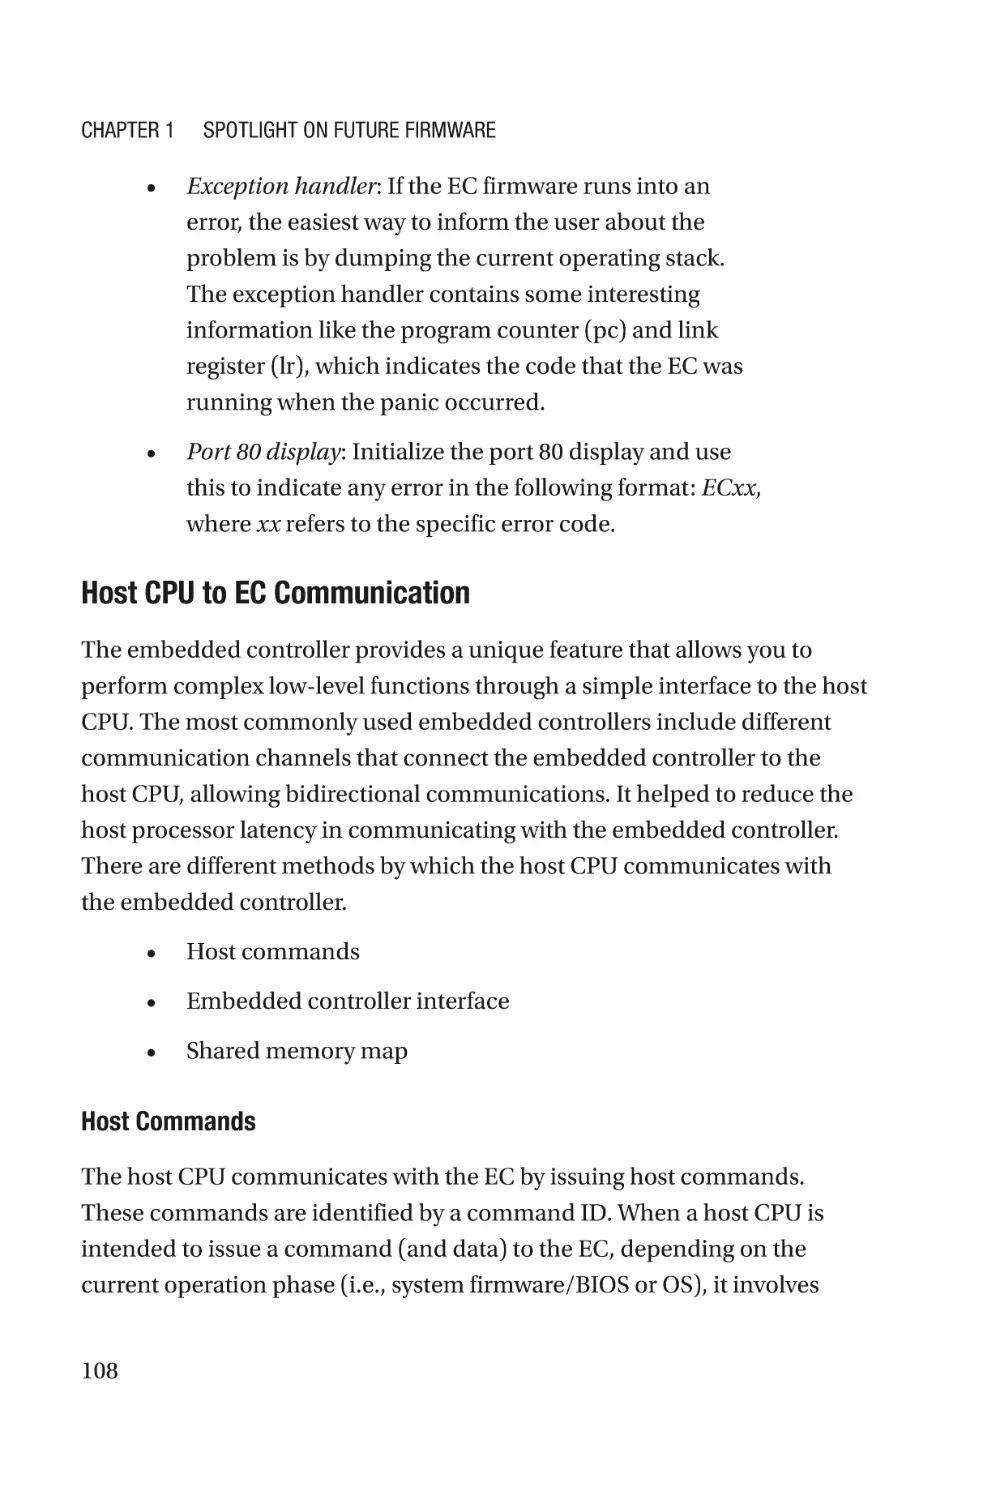 Host CPU to EC Communication
Host Commands